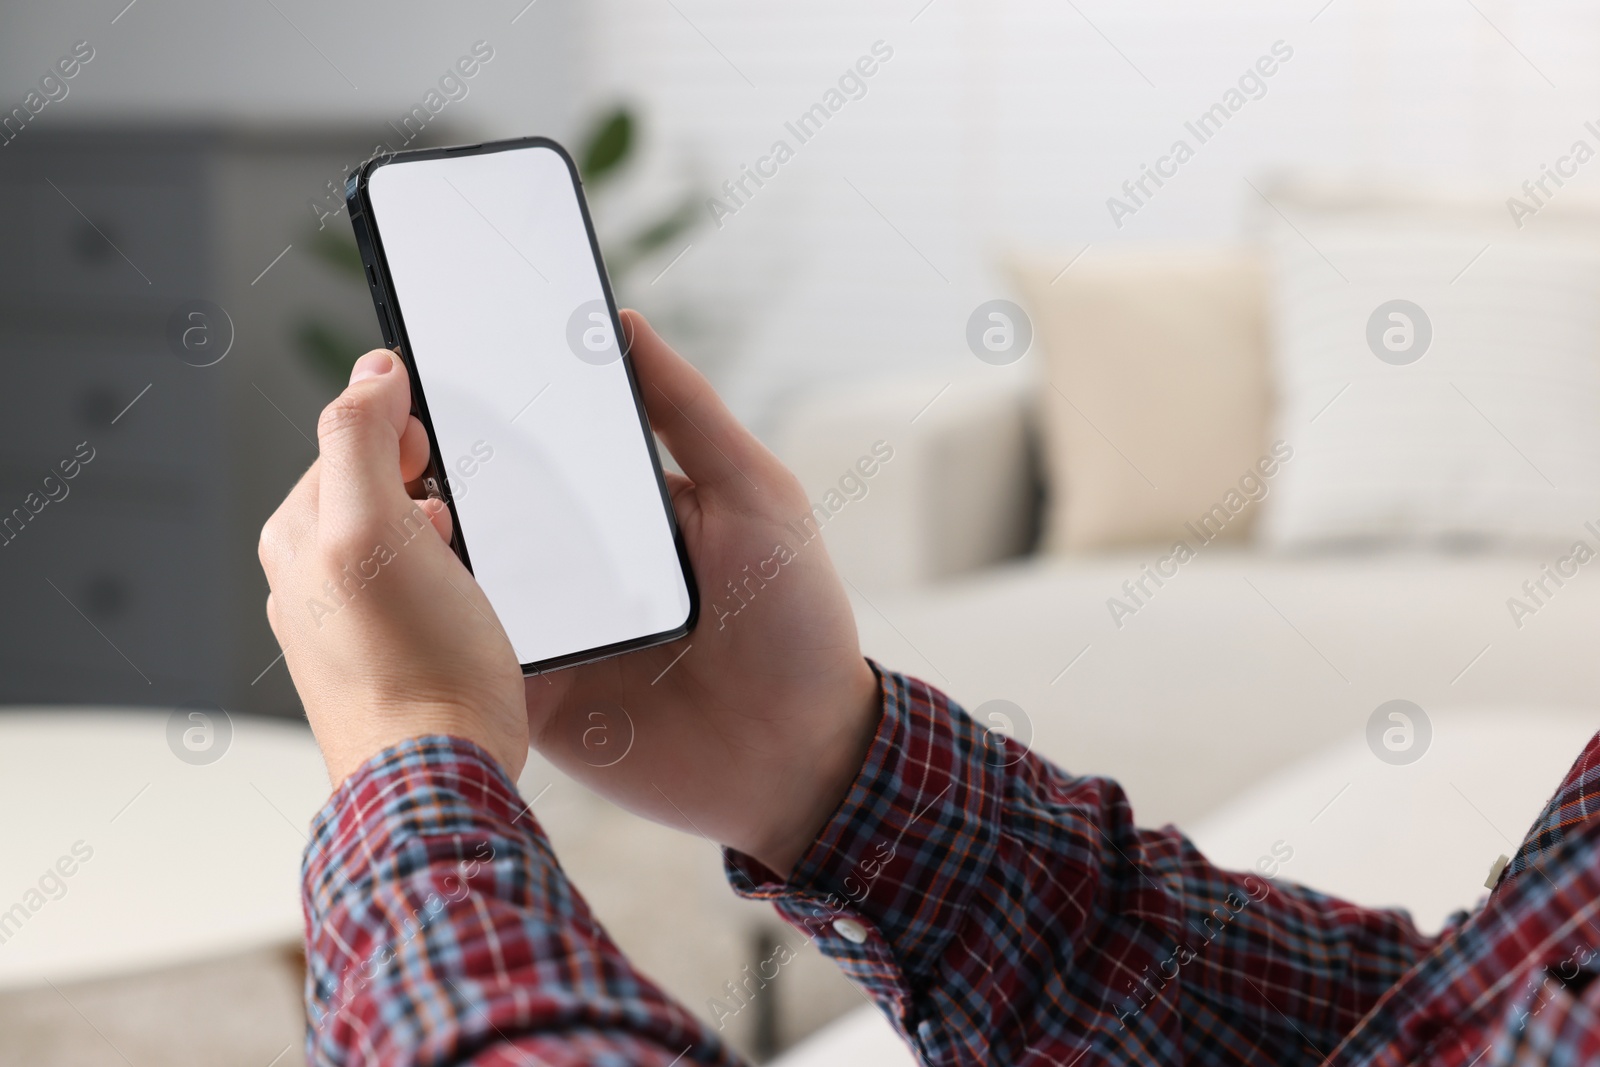 Photo of Man using mobile phone indoors, closeup view